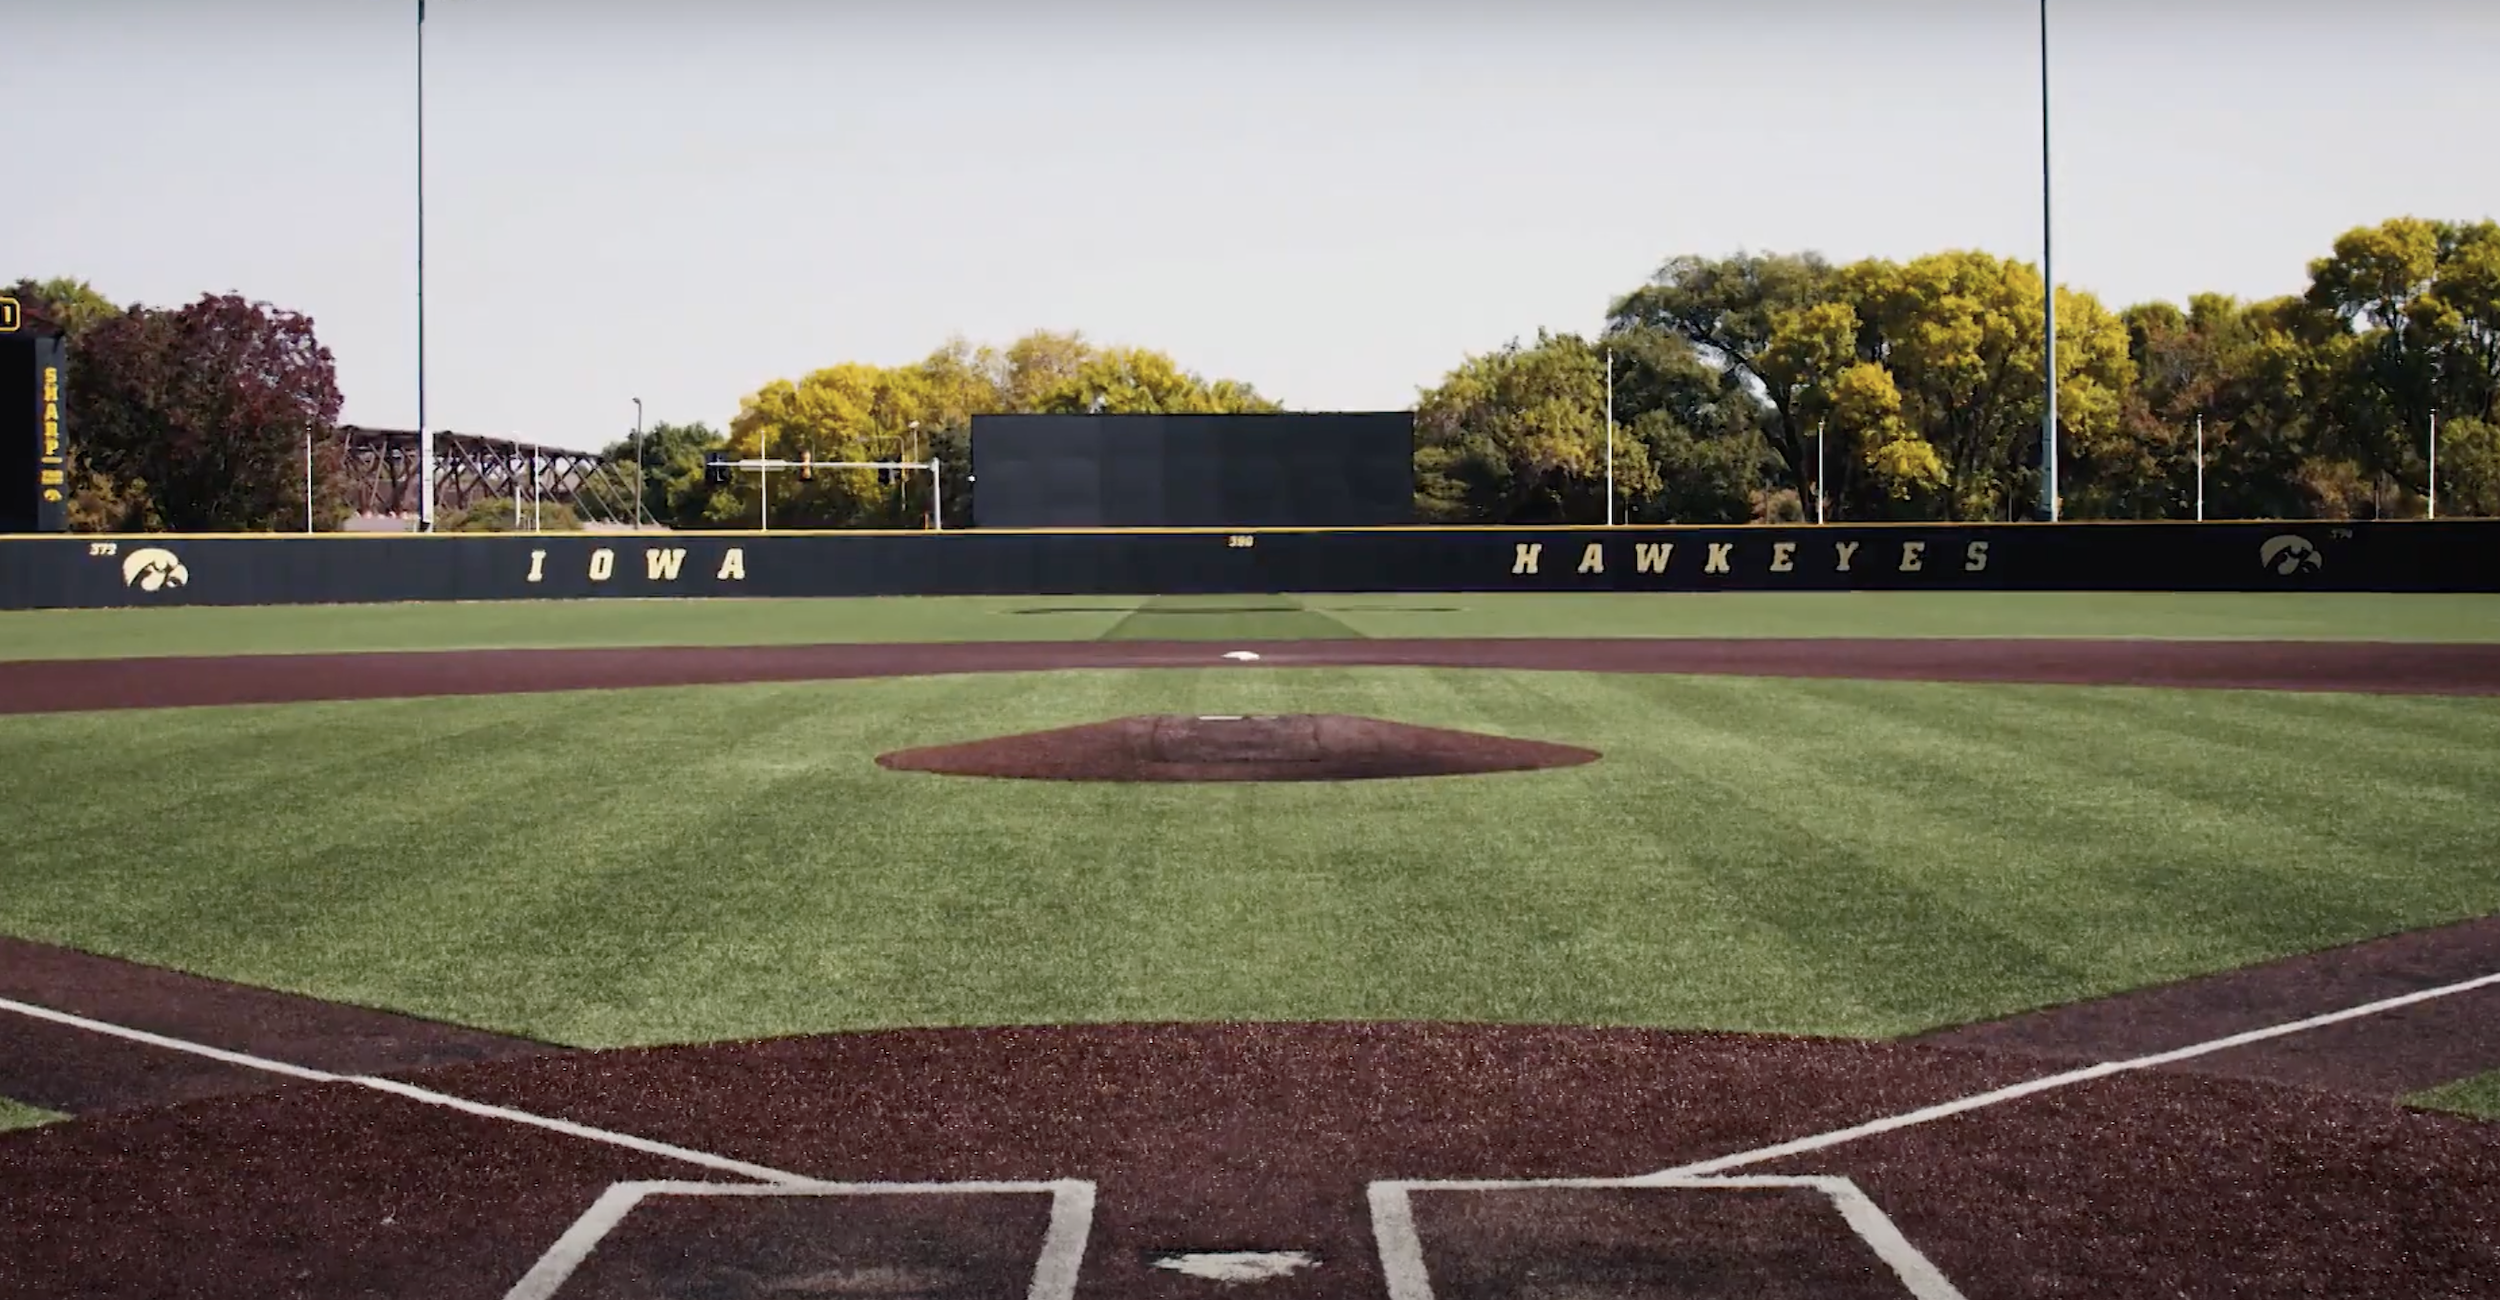 Duane Banks Field, where the Iowa Hawkeyes baseball team plays.